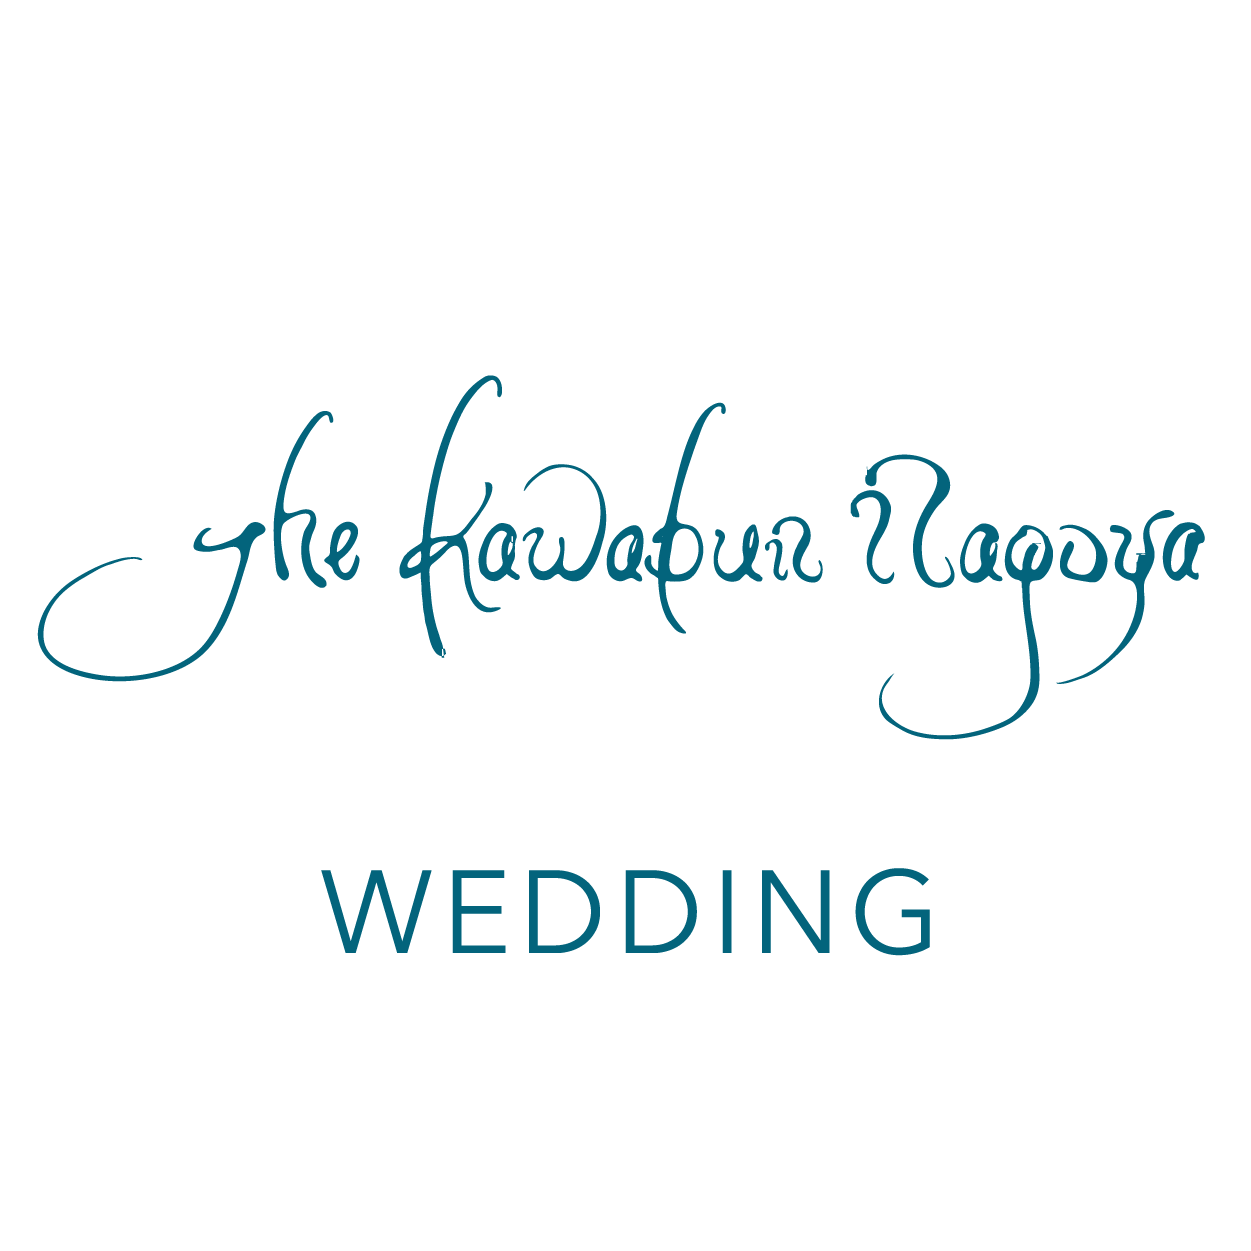 thekawabun.wedding